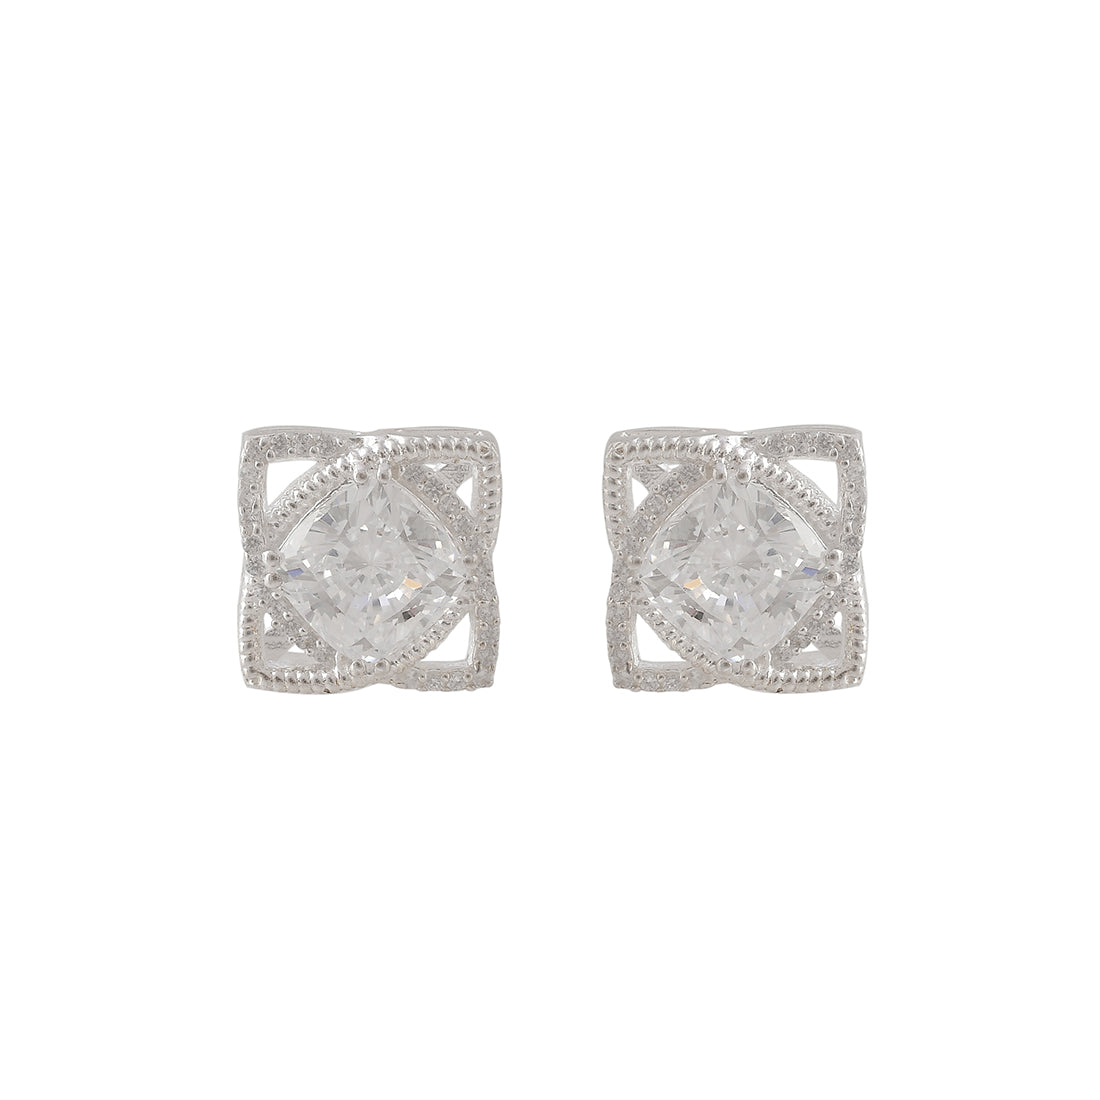 Silver Cubic Zirconia Stud Earrings  8mm  F0307  FHinds Jewellers